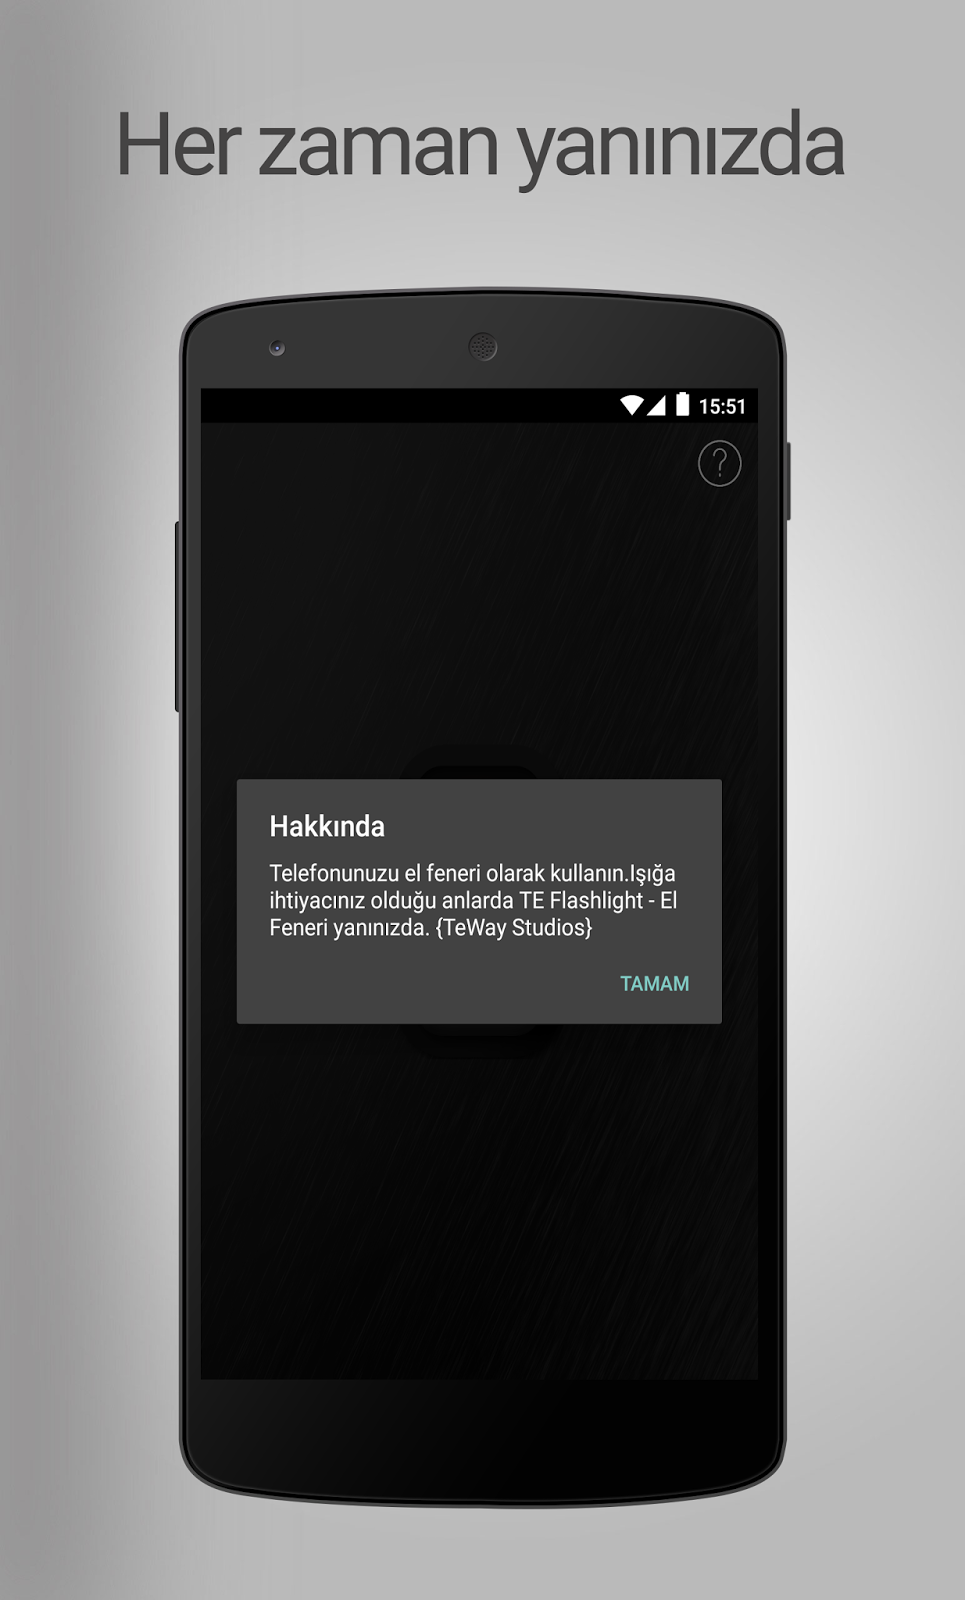  Android Uygulama tanıtımı